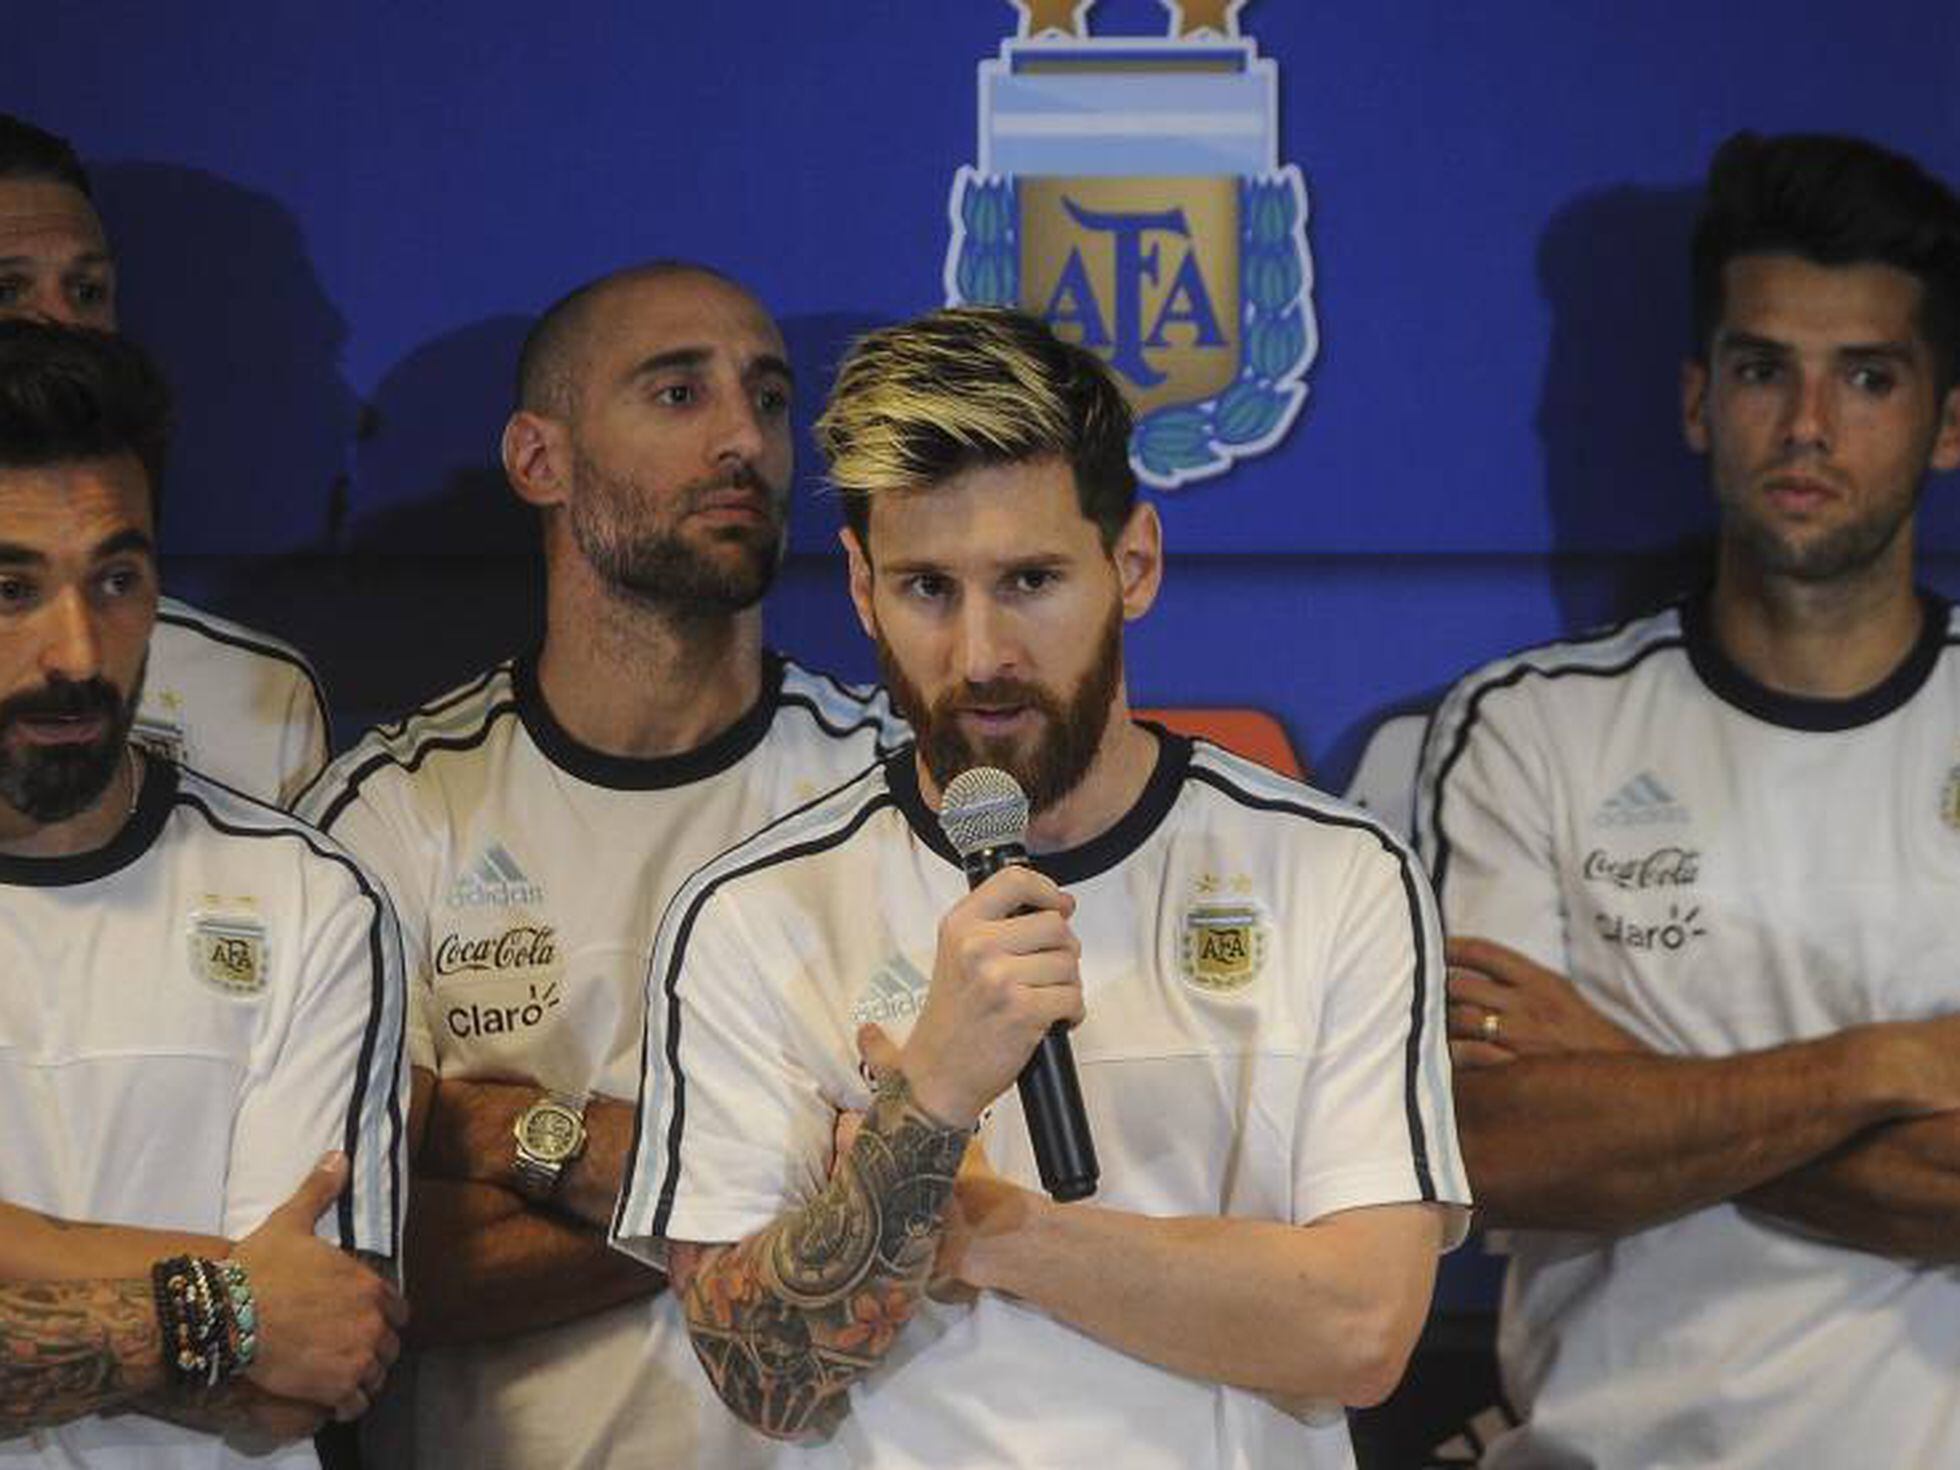 Copa 2018: Messi desperta e conduz Argentina às oitavas - Portal